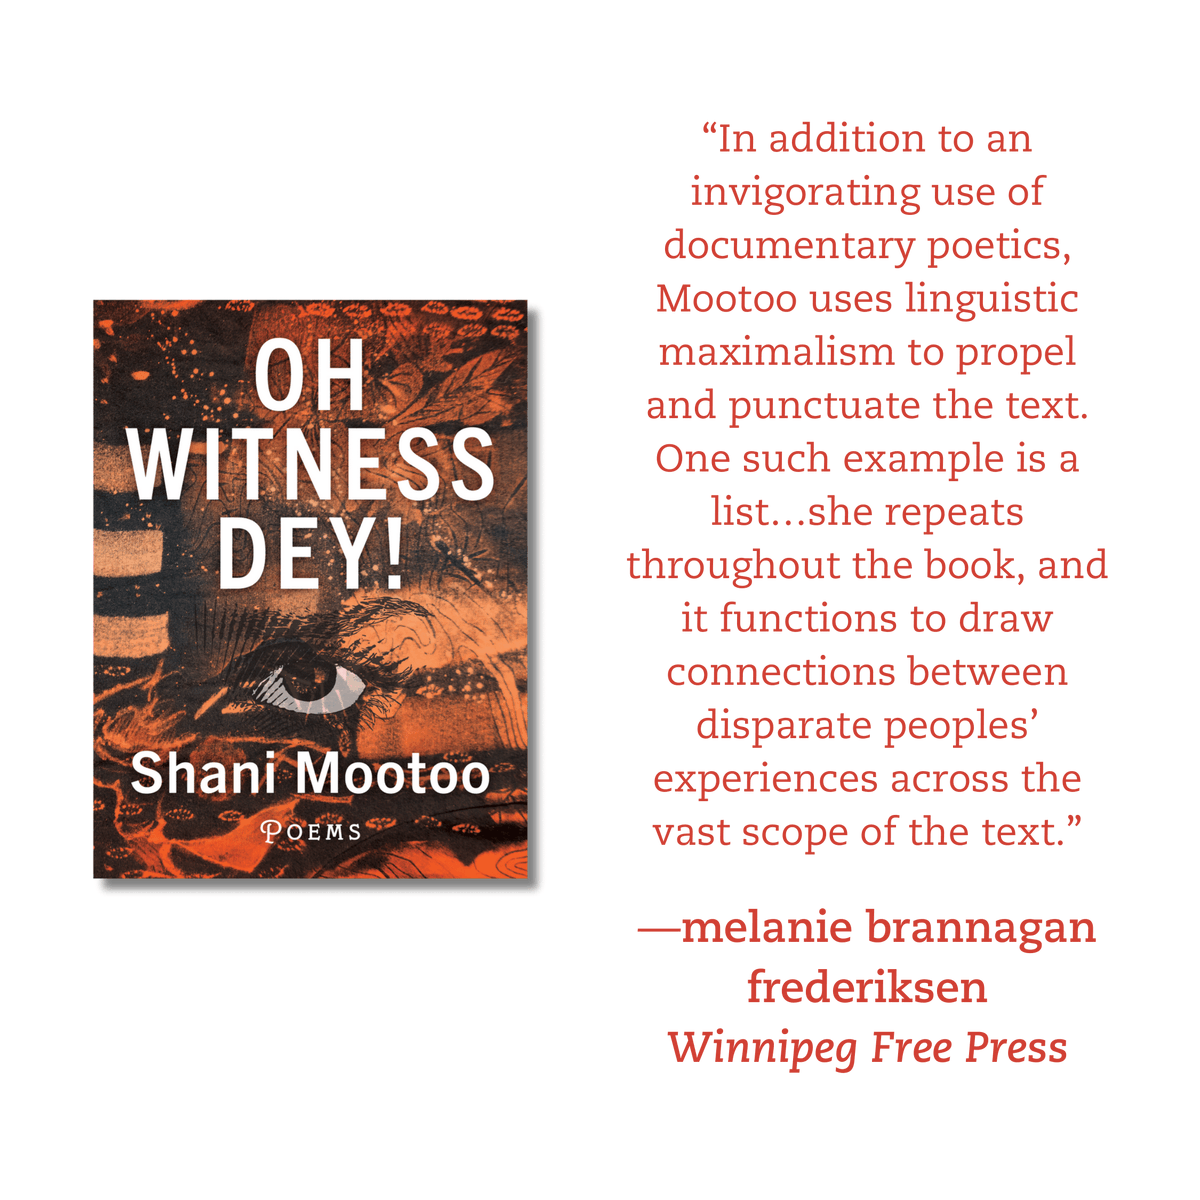 For Winnipeg Free Press, melanie brannagan frederiksen reviews Oh Witness Dey! by Shani Mootoo: